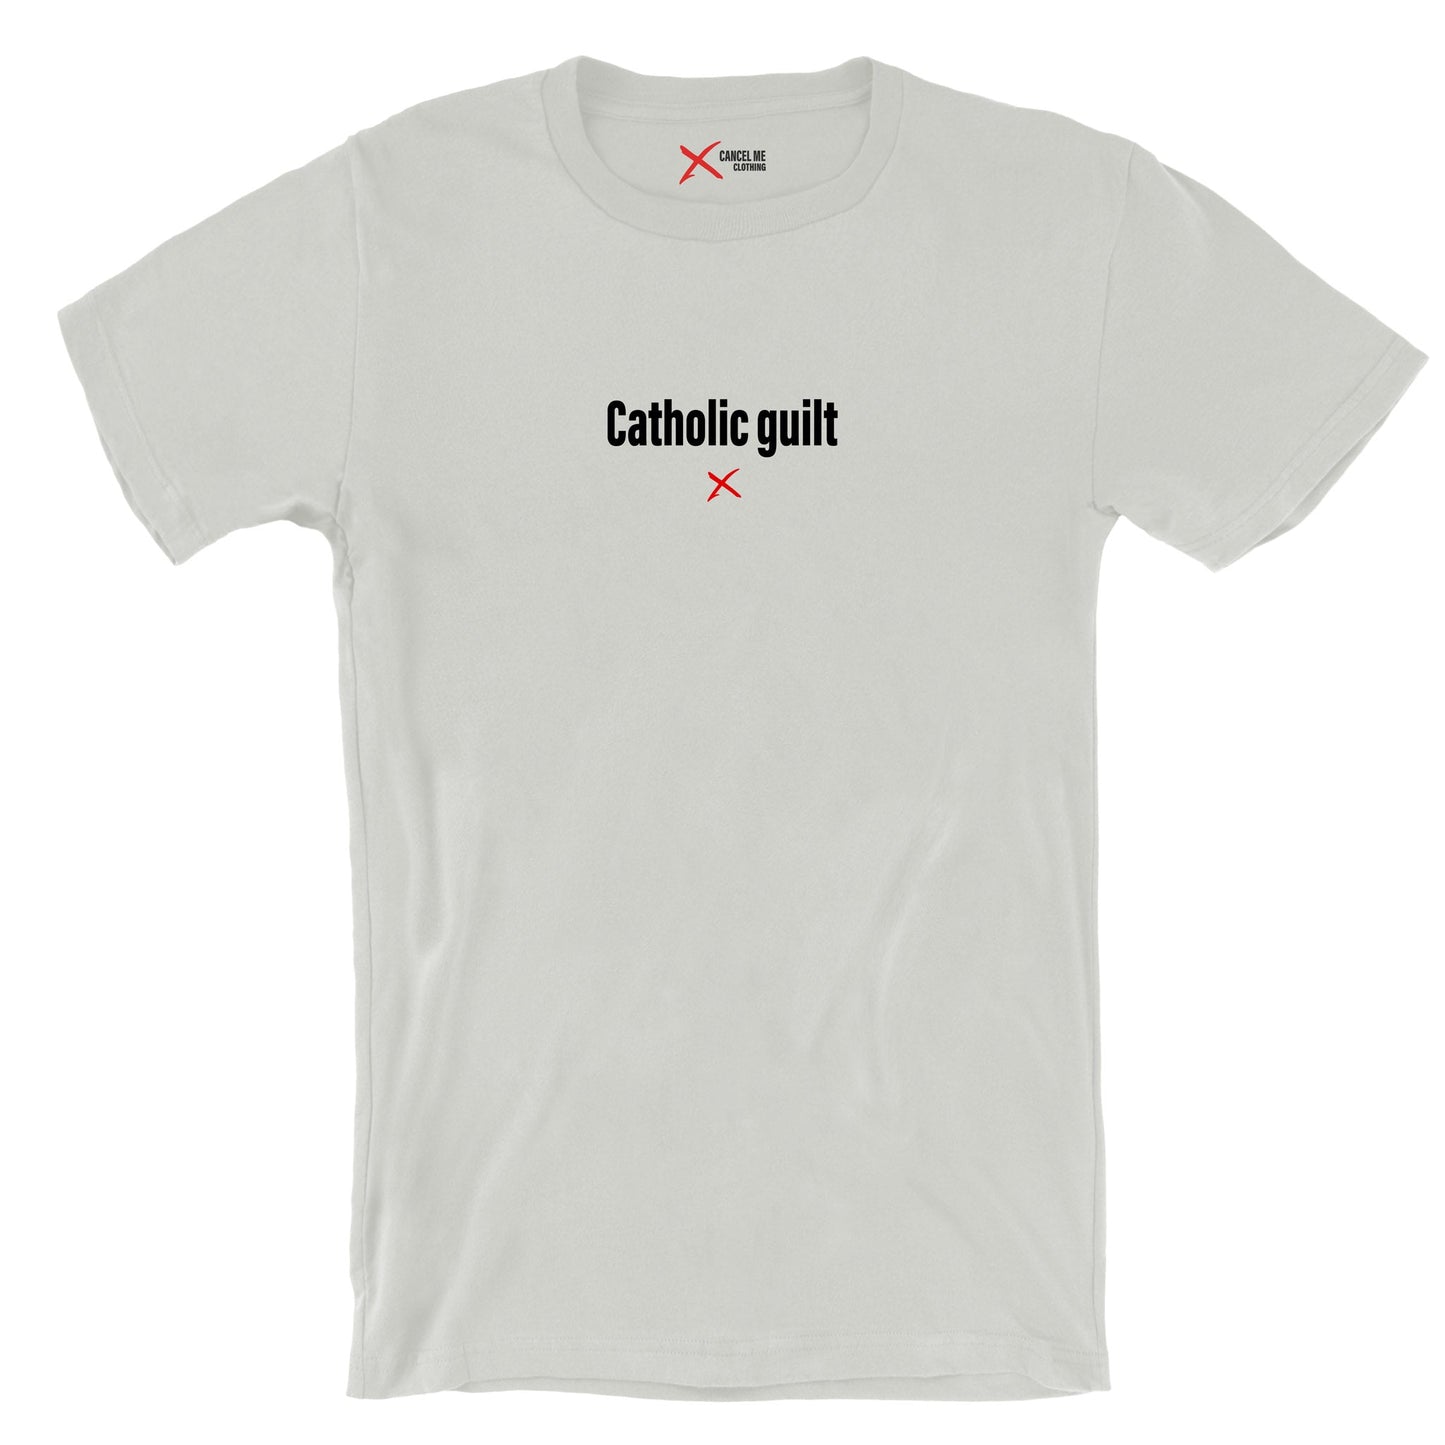 Catholic guilt - Shirt